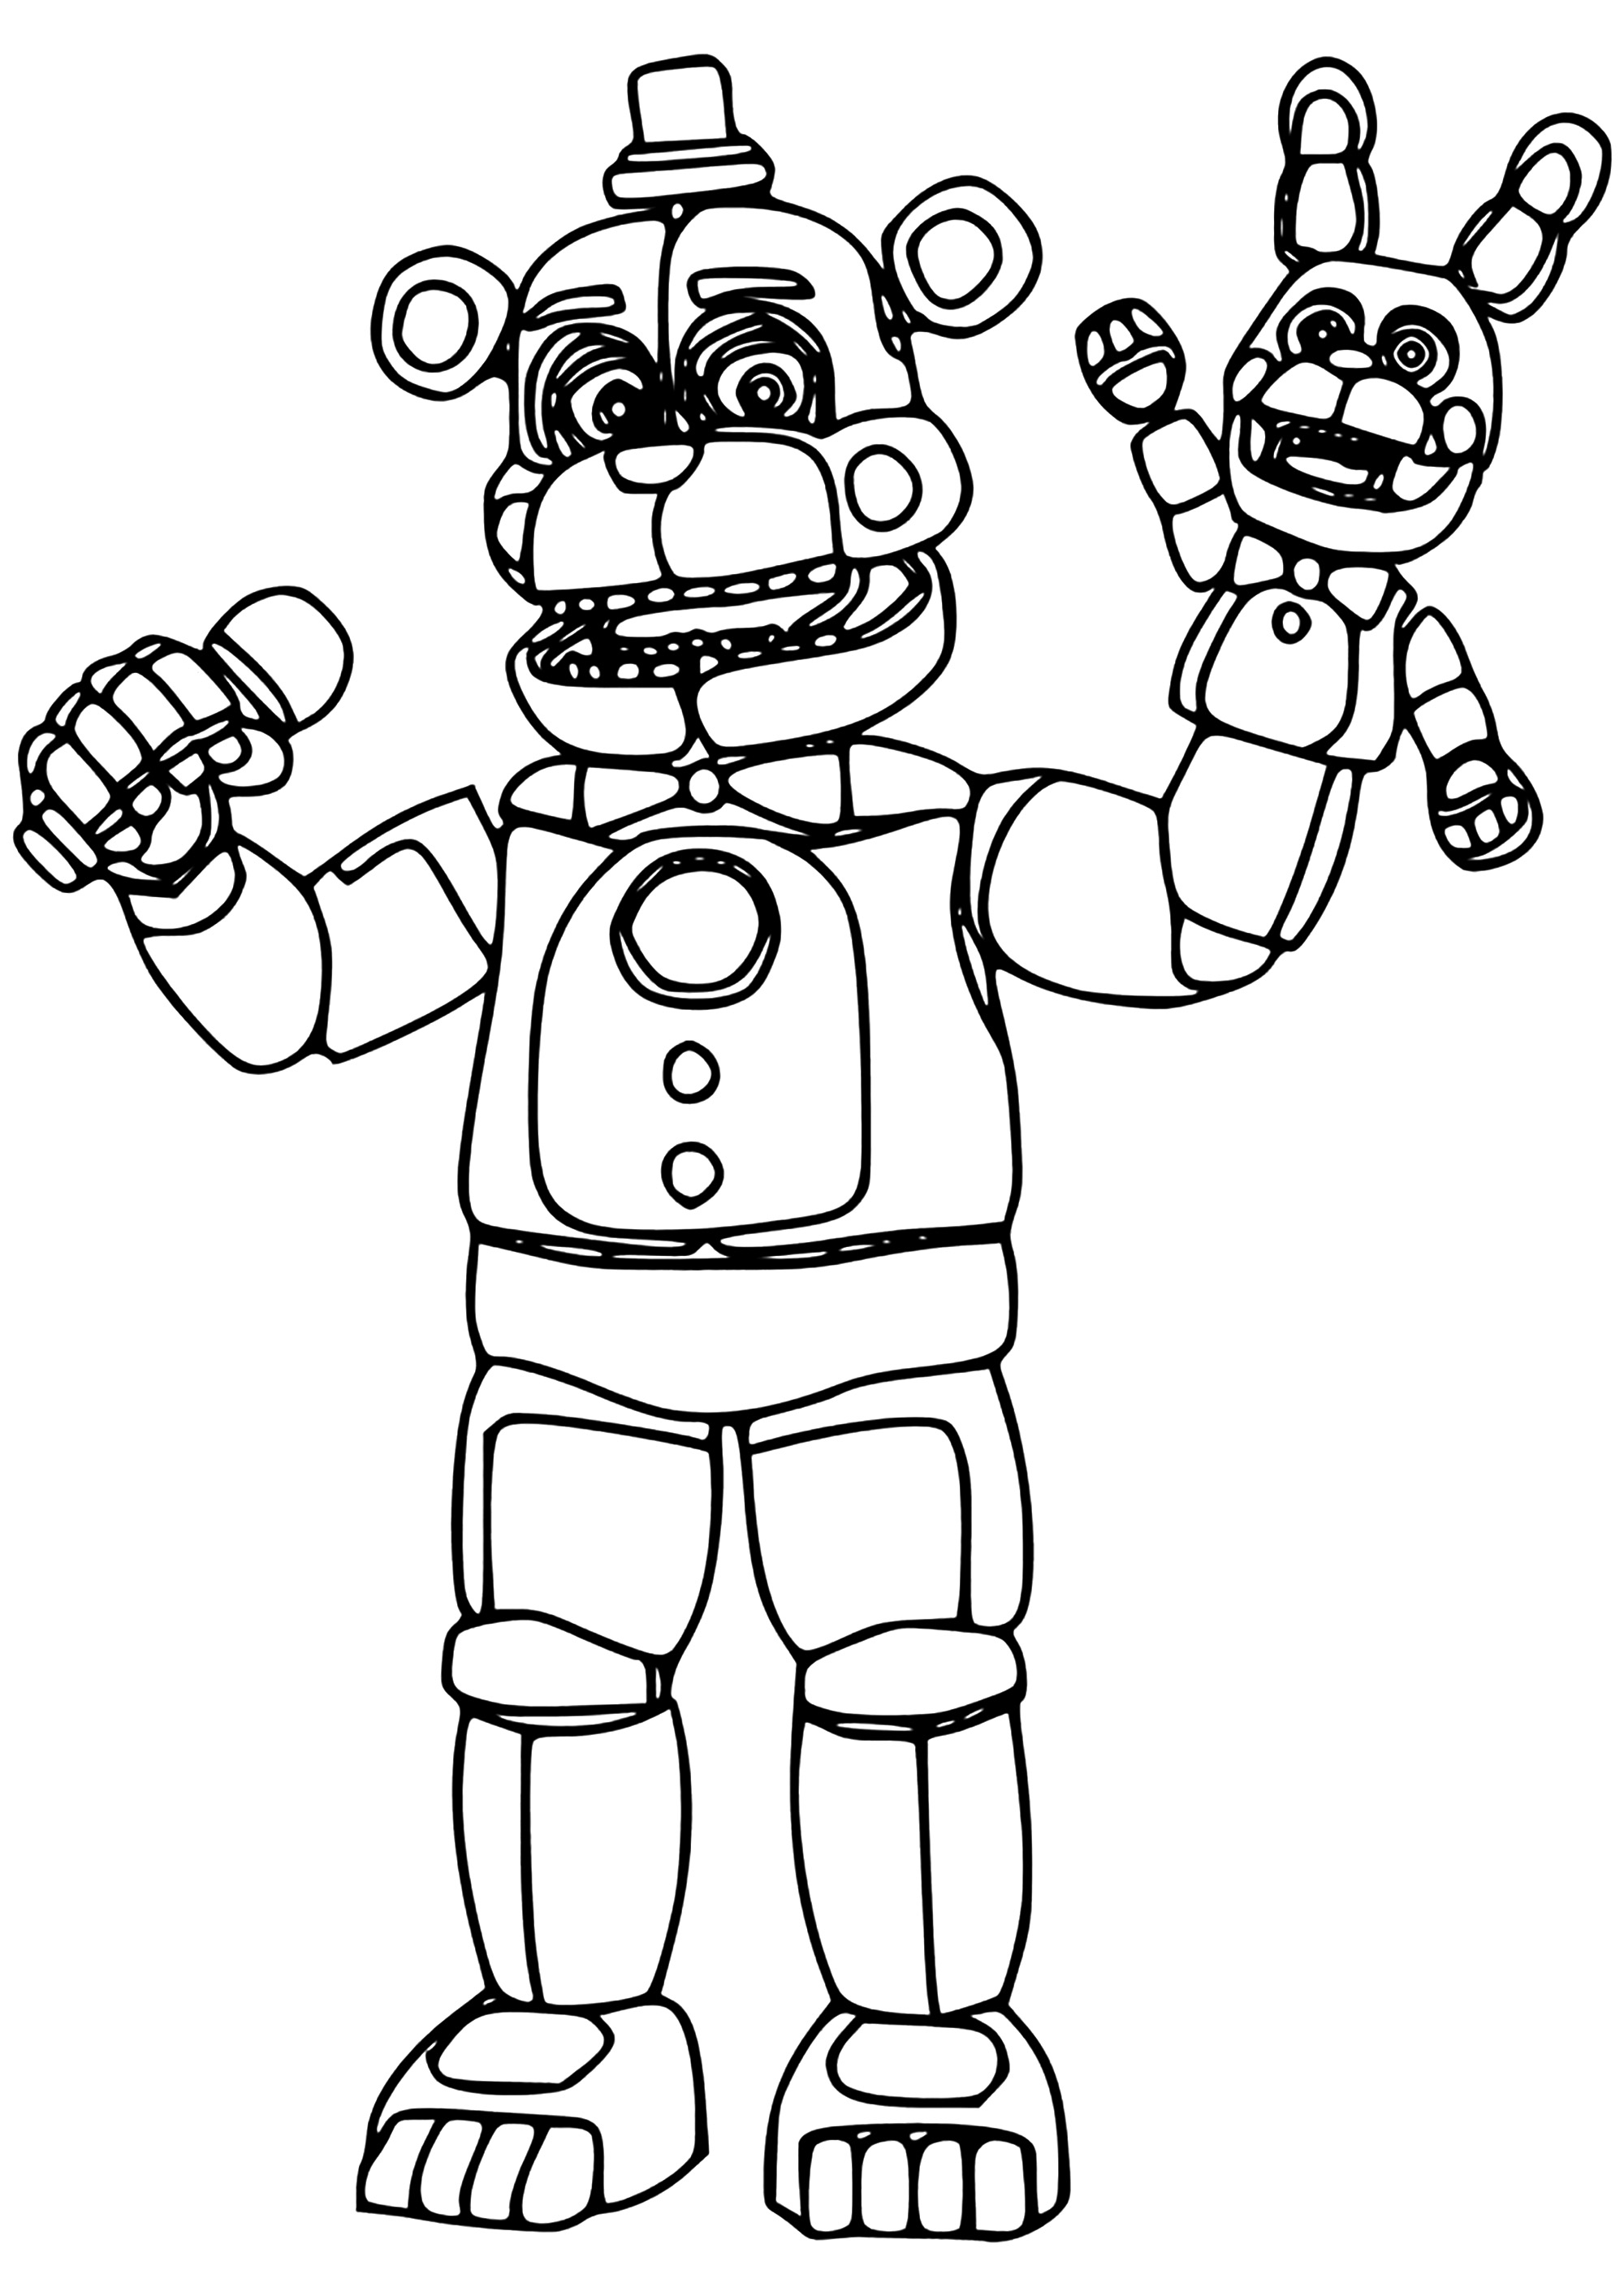 Freddy Fazbear with a puppet